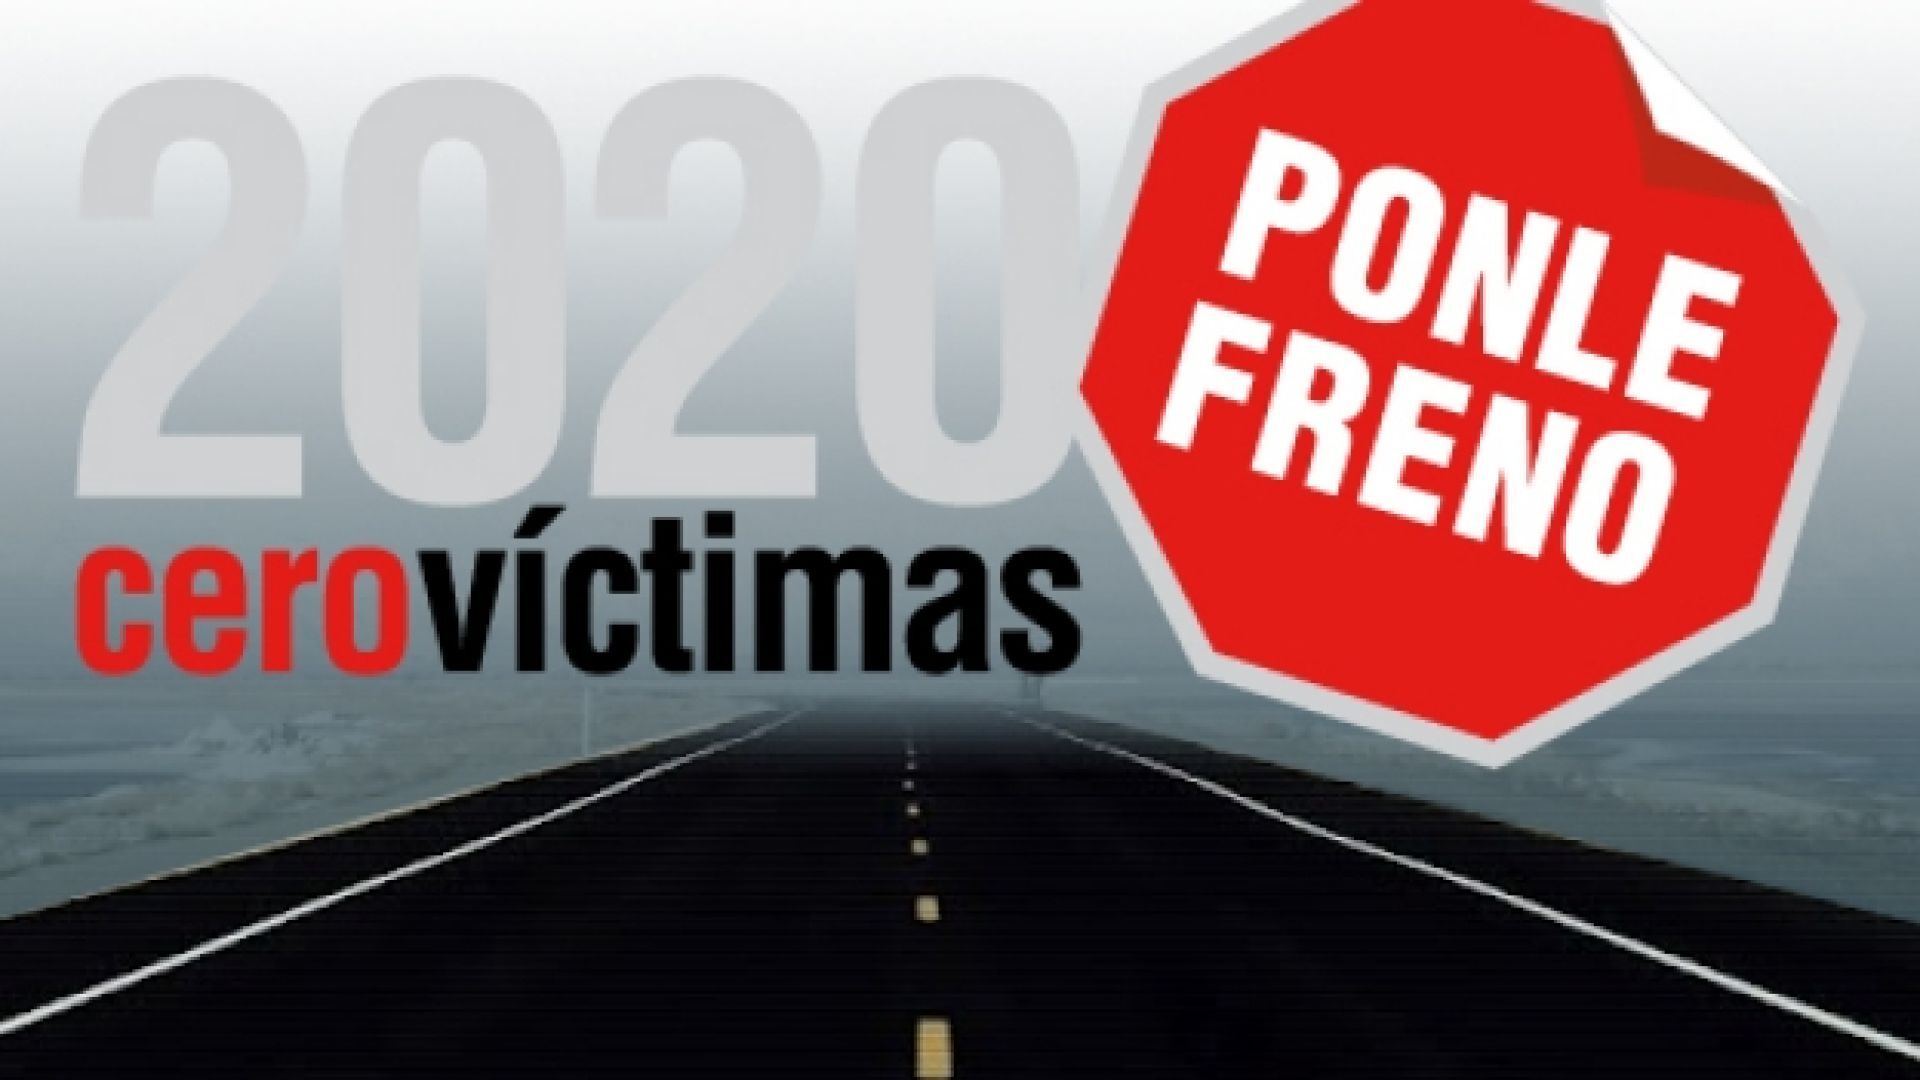 Jornadas Ponle Freno 2020 cero víctimas